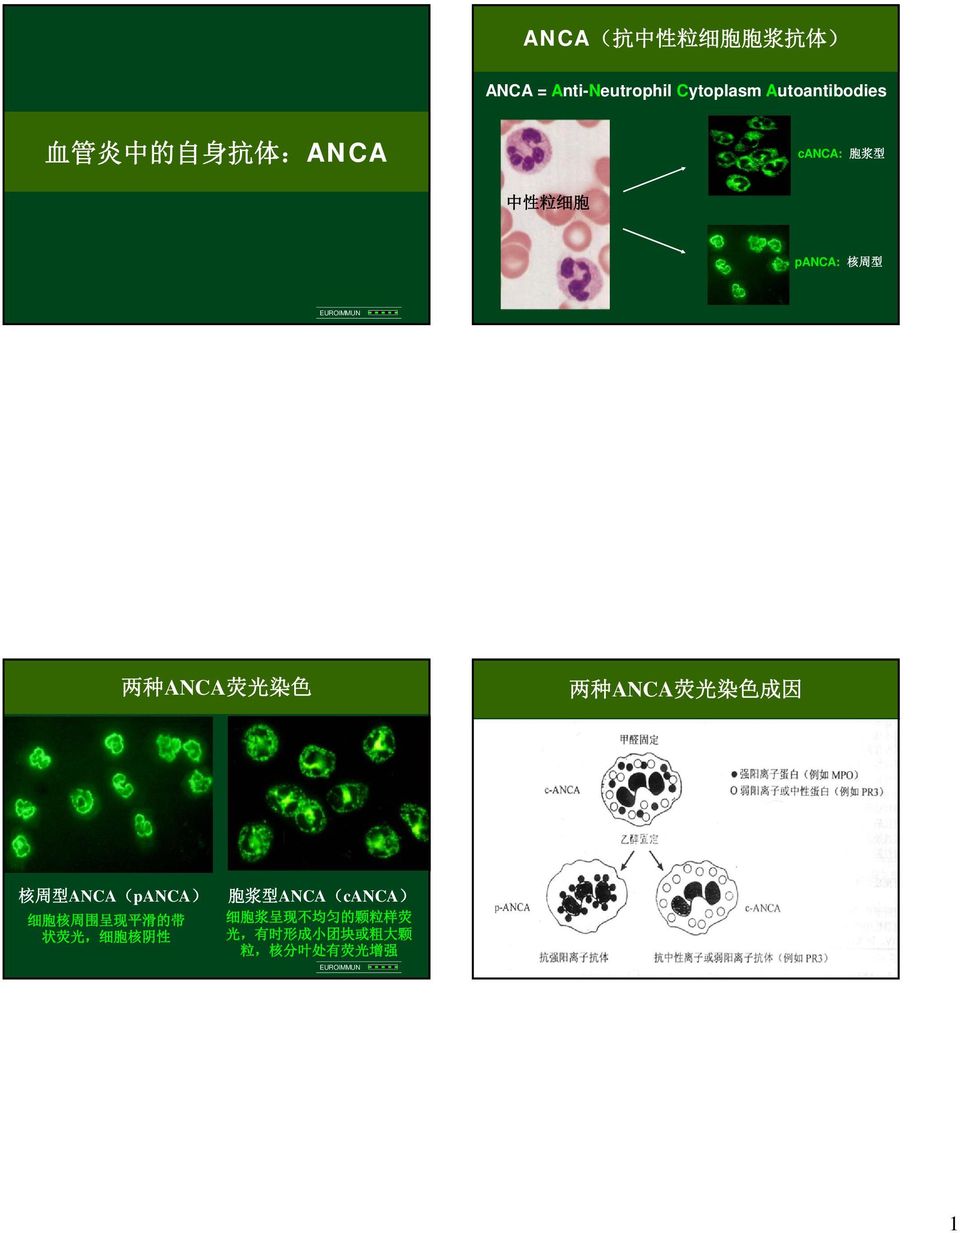 ANCA 荧 光 染 色 成 因 核 周 型 ANCA(pANCA) 细 胞 核 周 围 呈 现 平 滑 的 带 状 荧 光, 细 胞 核 阴 性 胞 浆 型